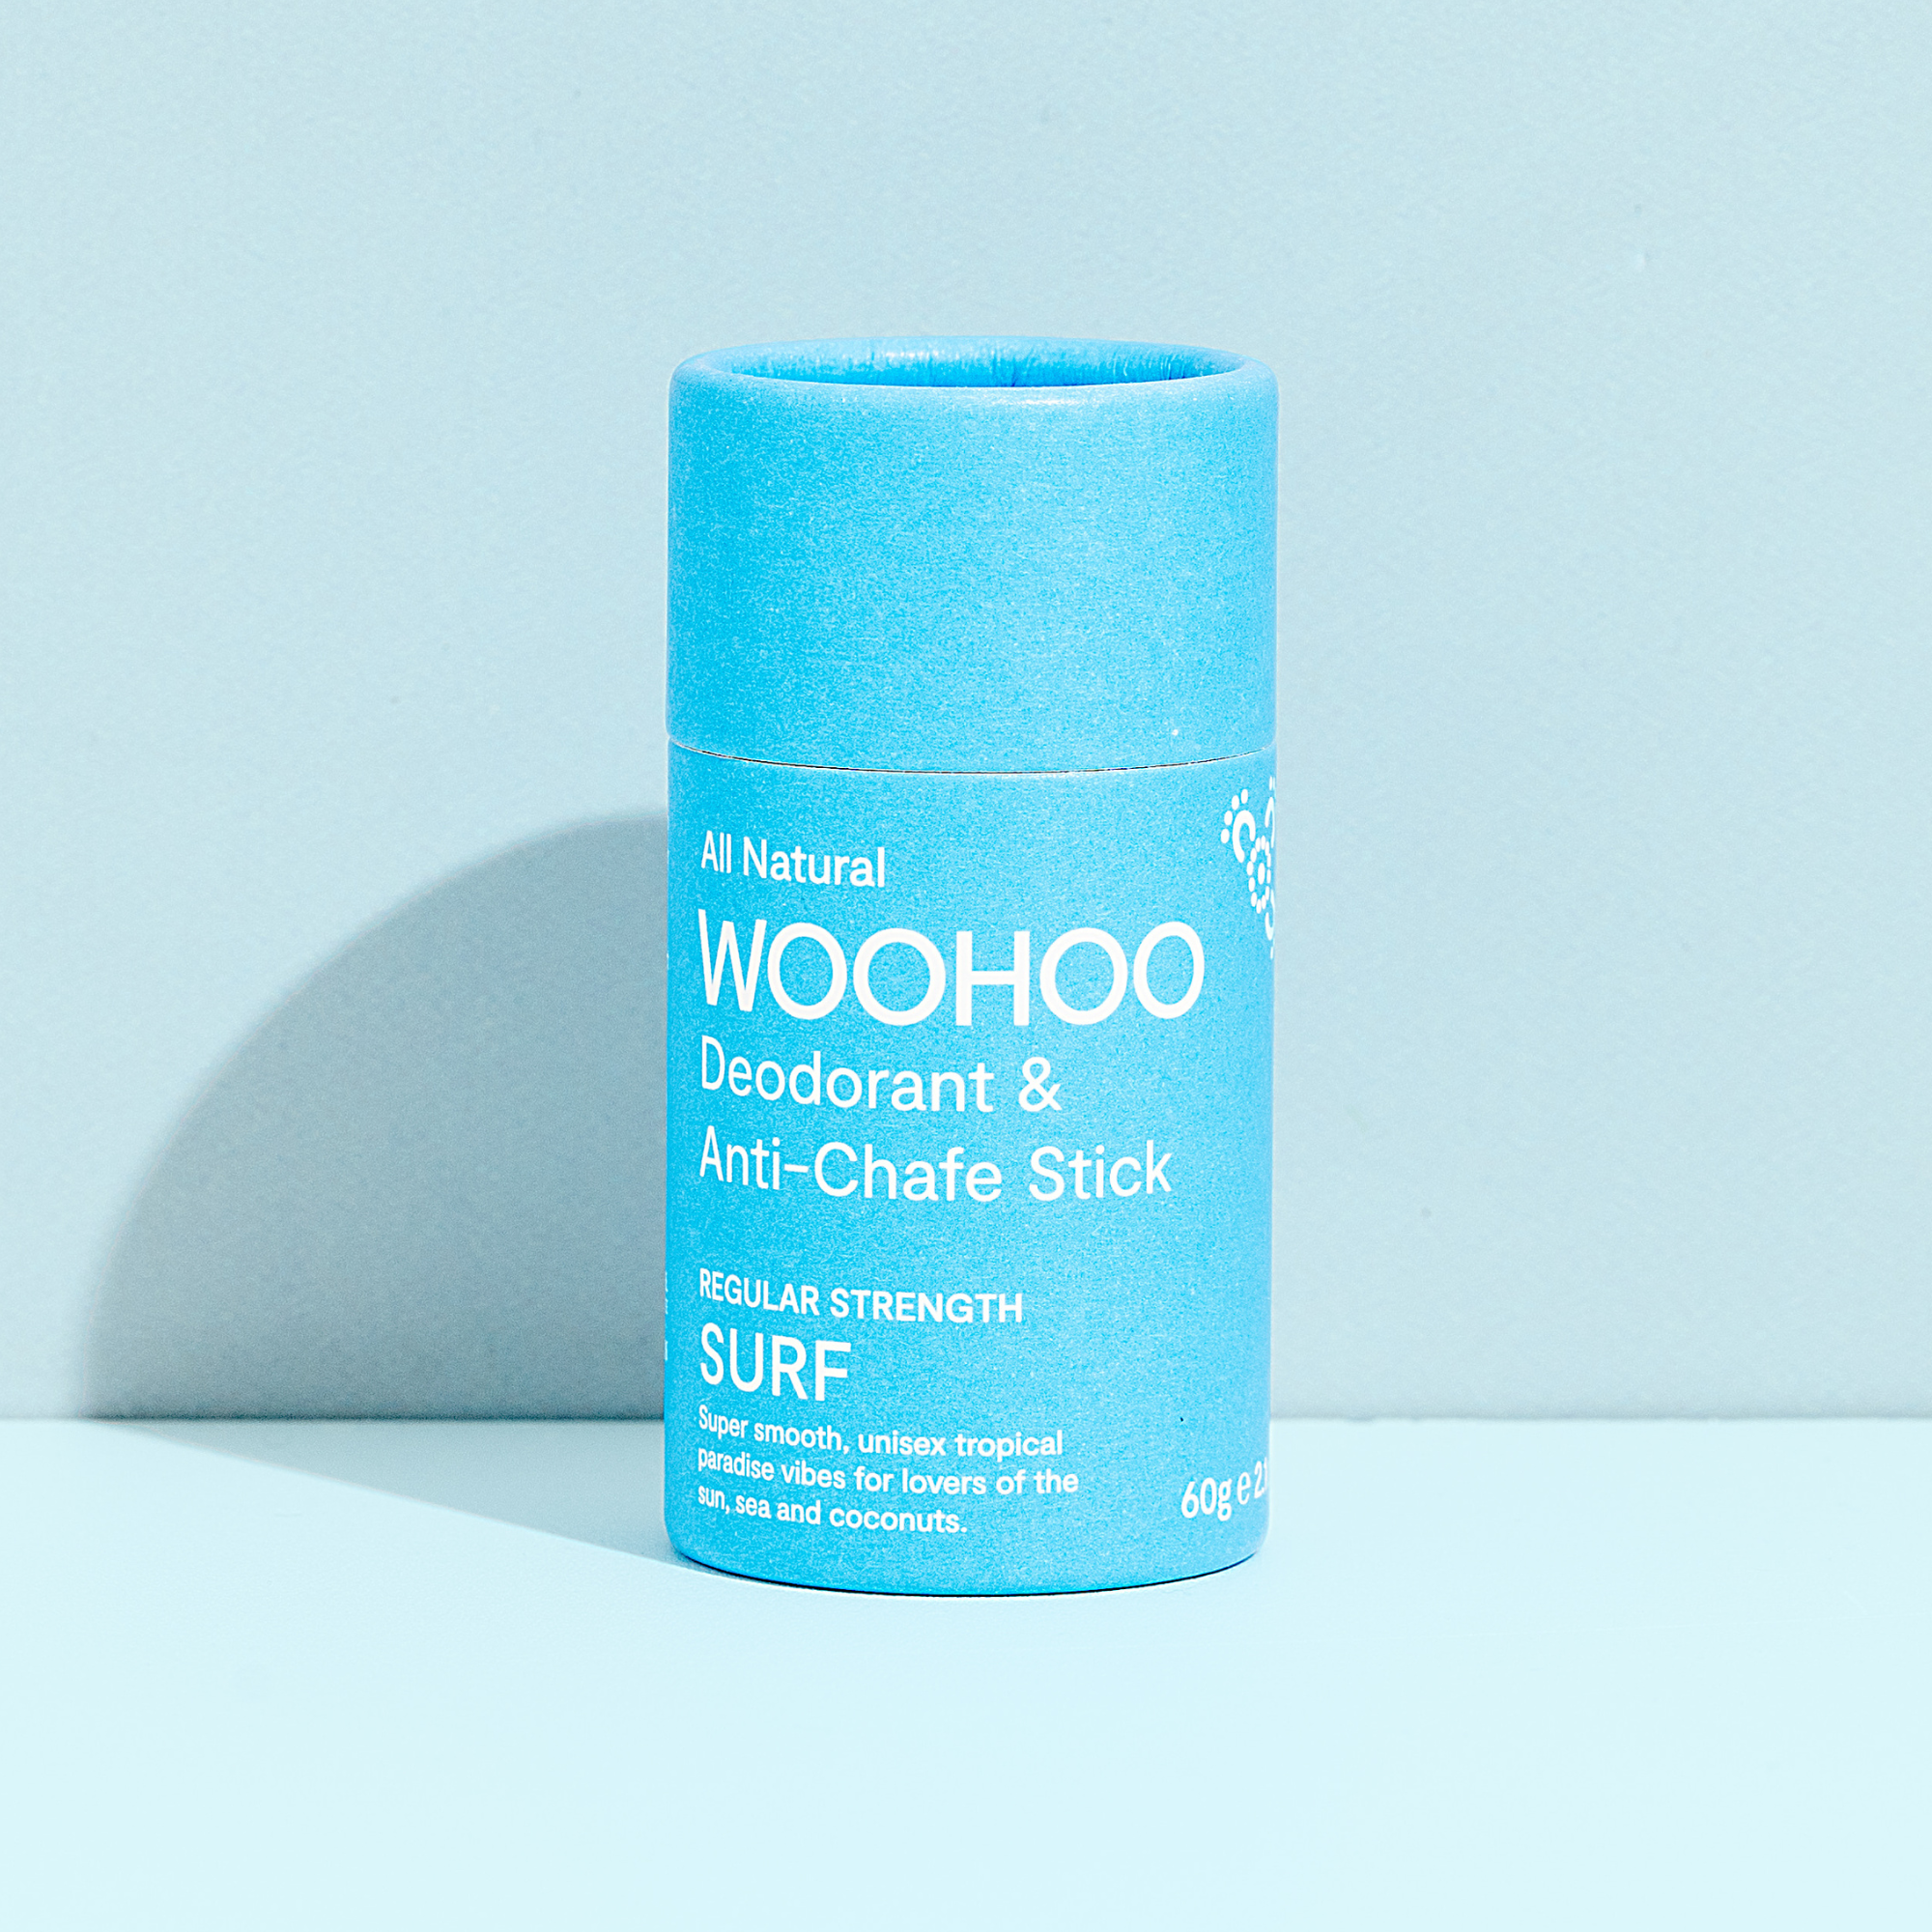 Woohoo Body - Natural Deodorant & Anti-Chafe Stick - Surf (60g)